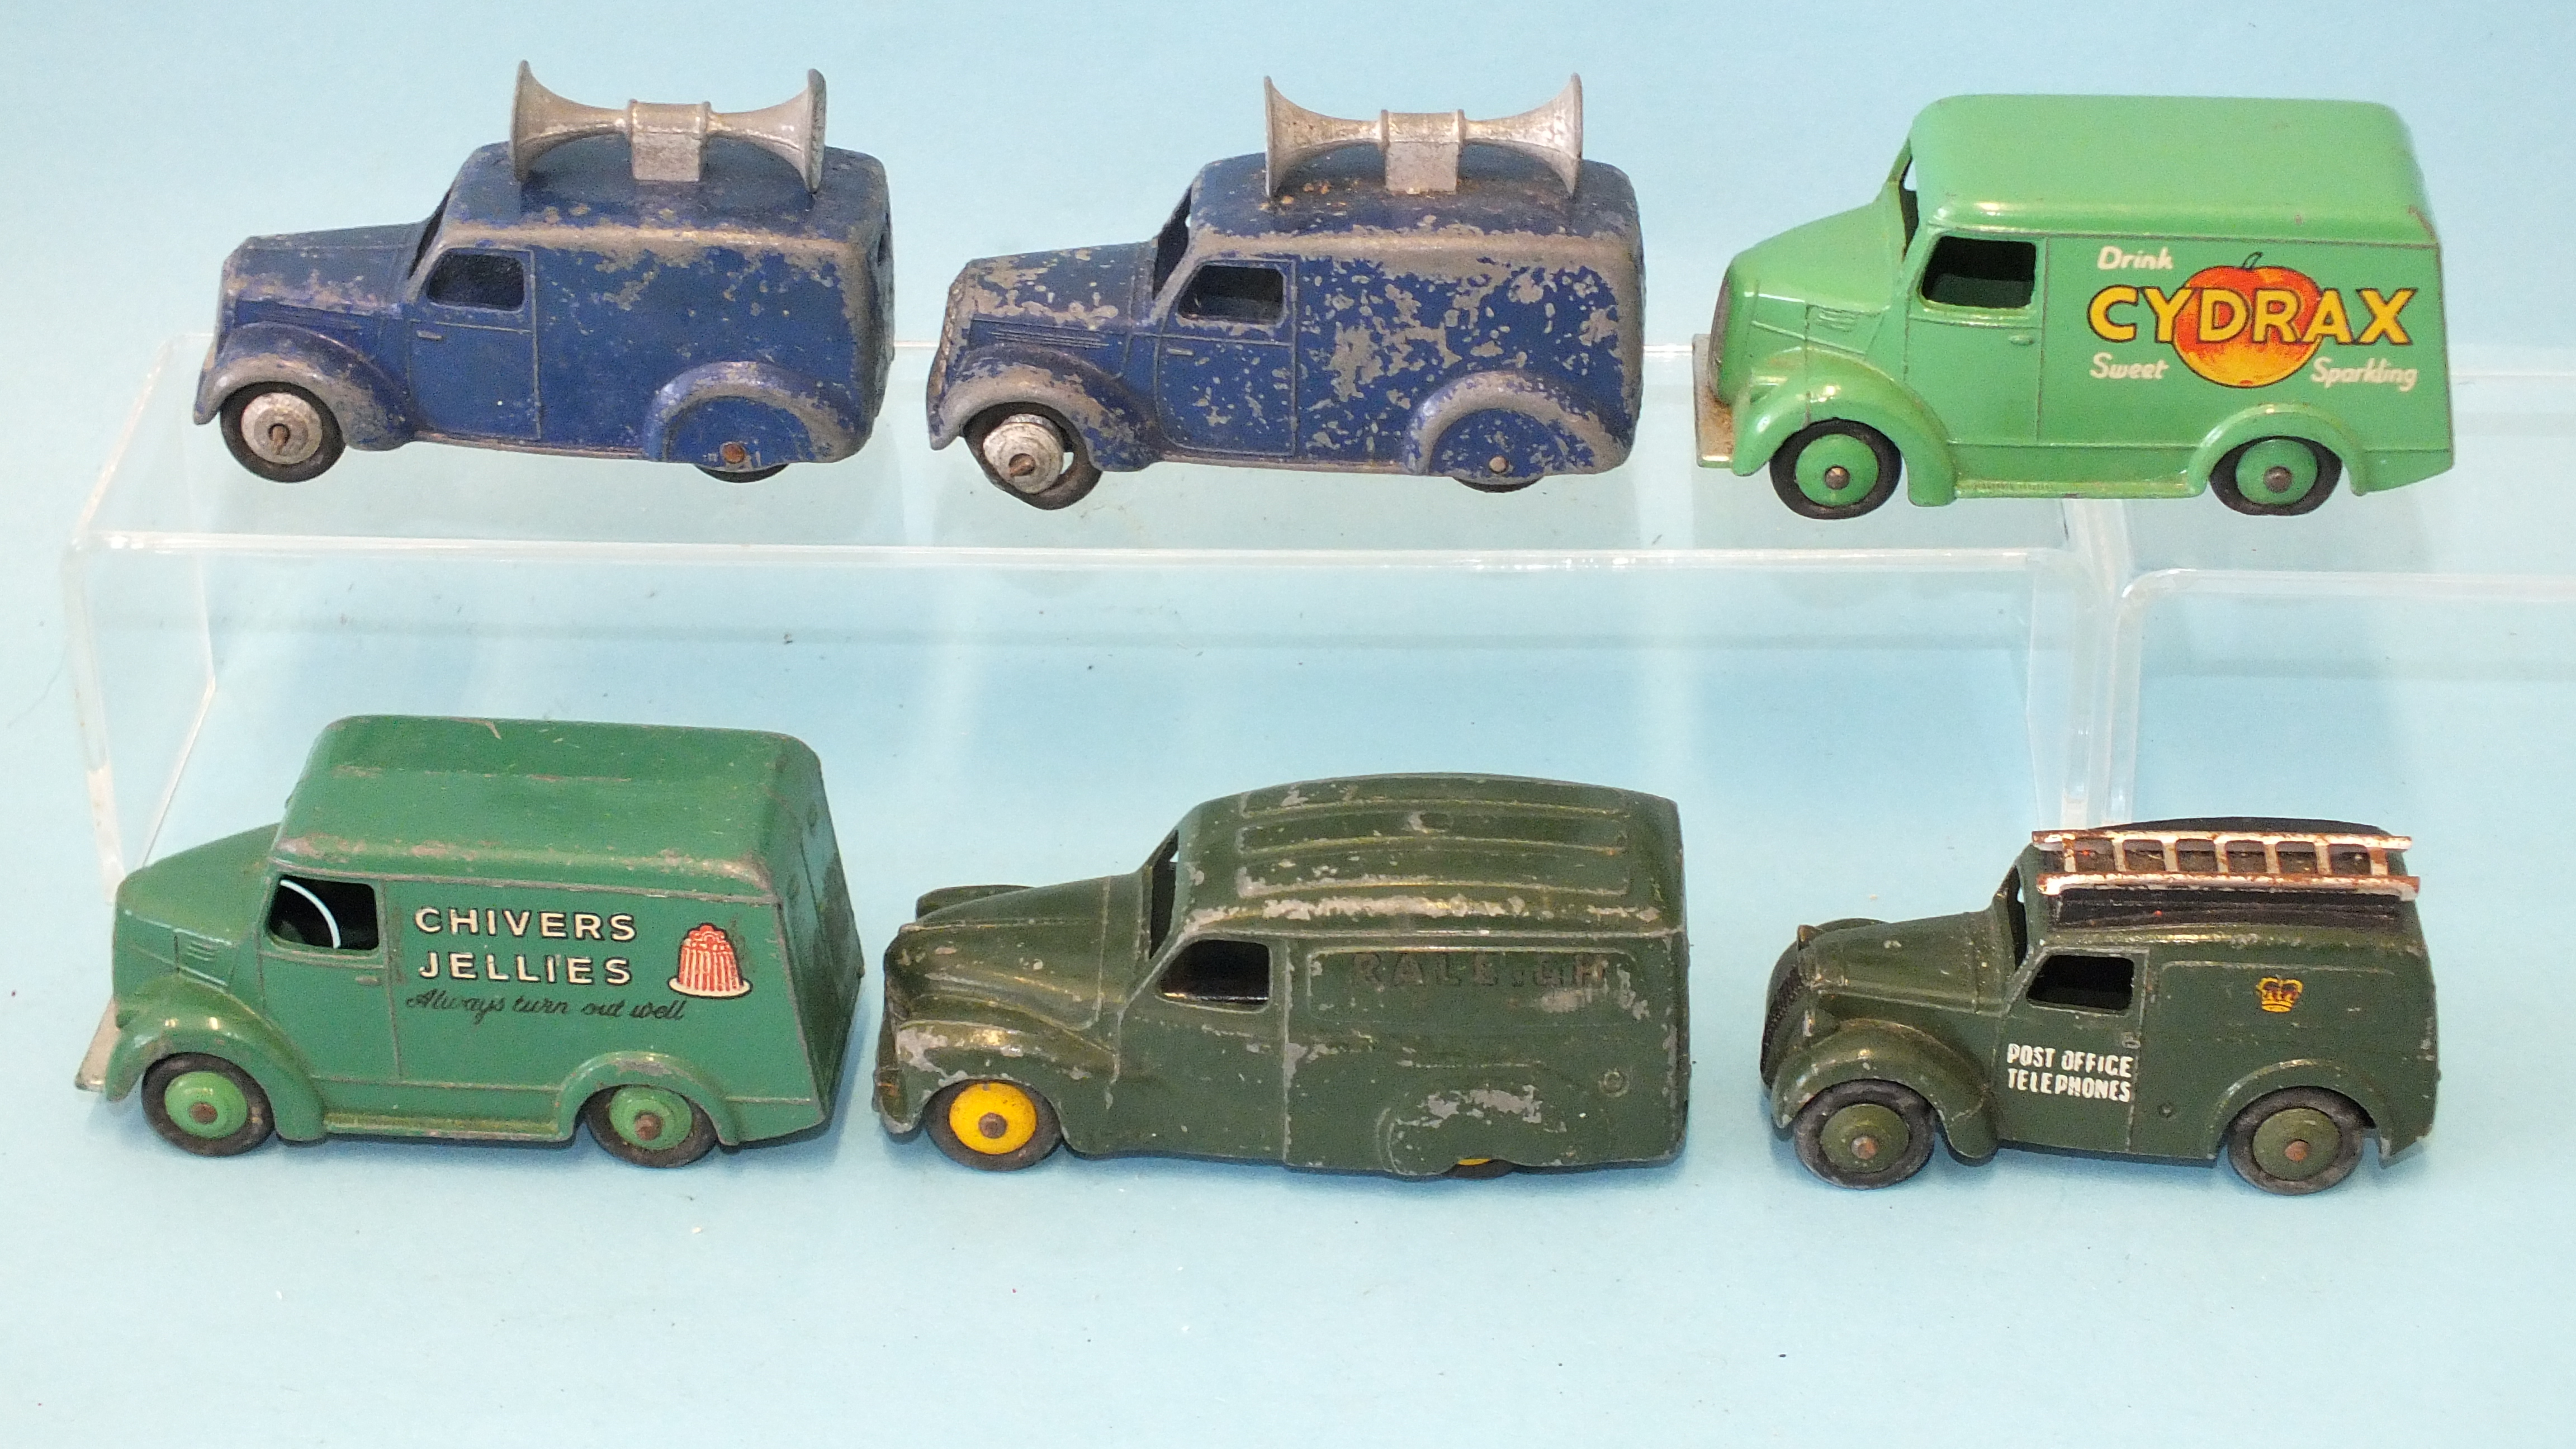 Dinky Toys, Trojan Vans: 452 "Chivers Jellies" and 453 "Cydrax", 261 Post Office Telephones van, 472